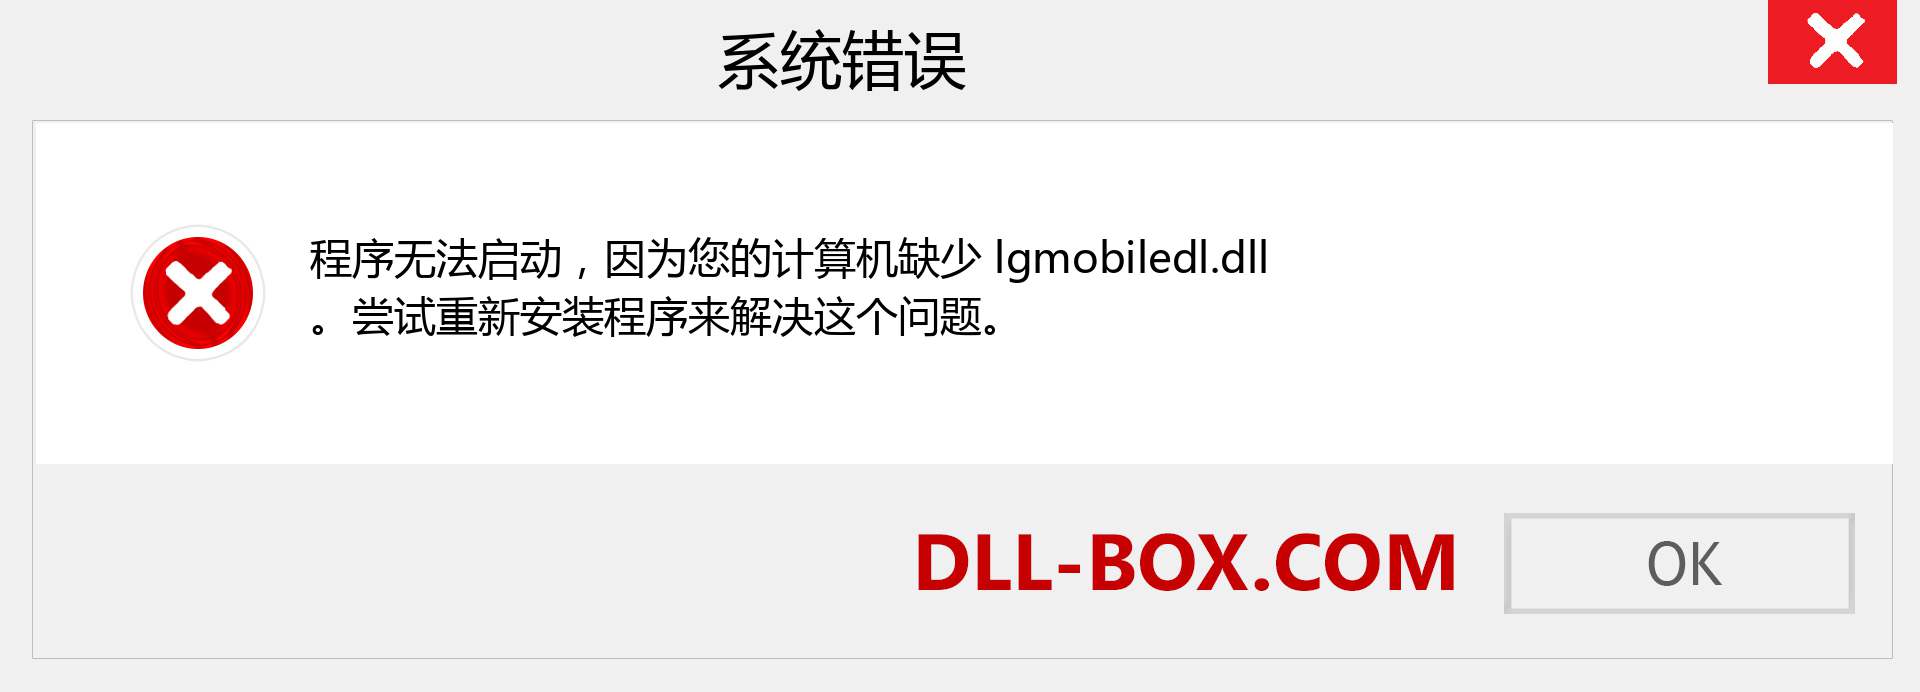 lgmobiledl.dll 文件丢失？。 适用于 Windows 7、8、10 的下载 - 修复 Windows、照片、图像上的 lgmobiledl dll 丢失错误